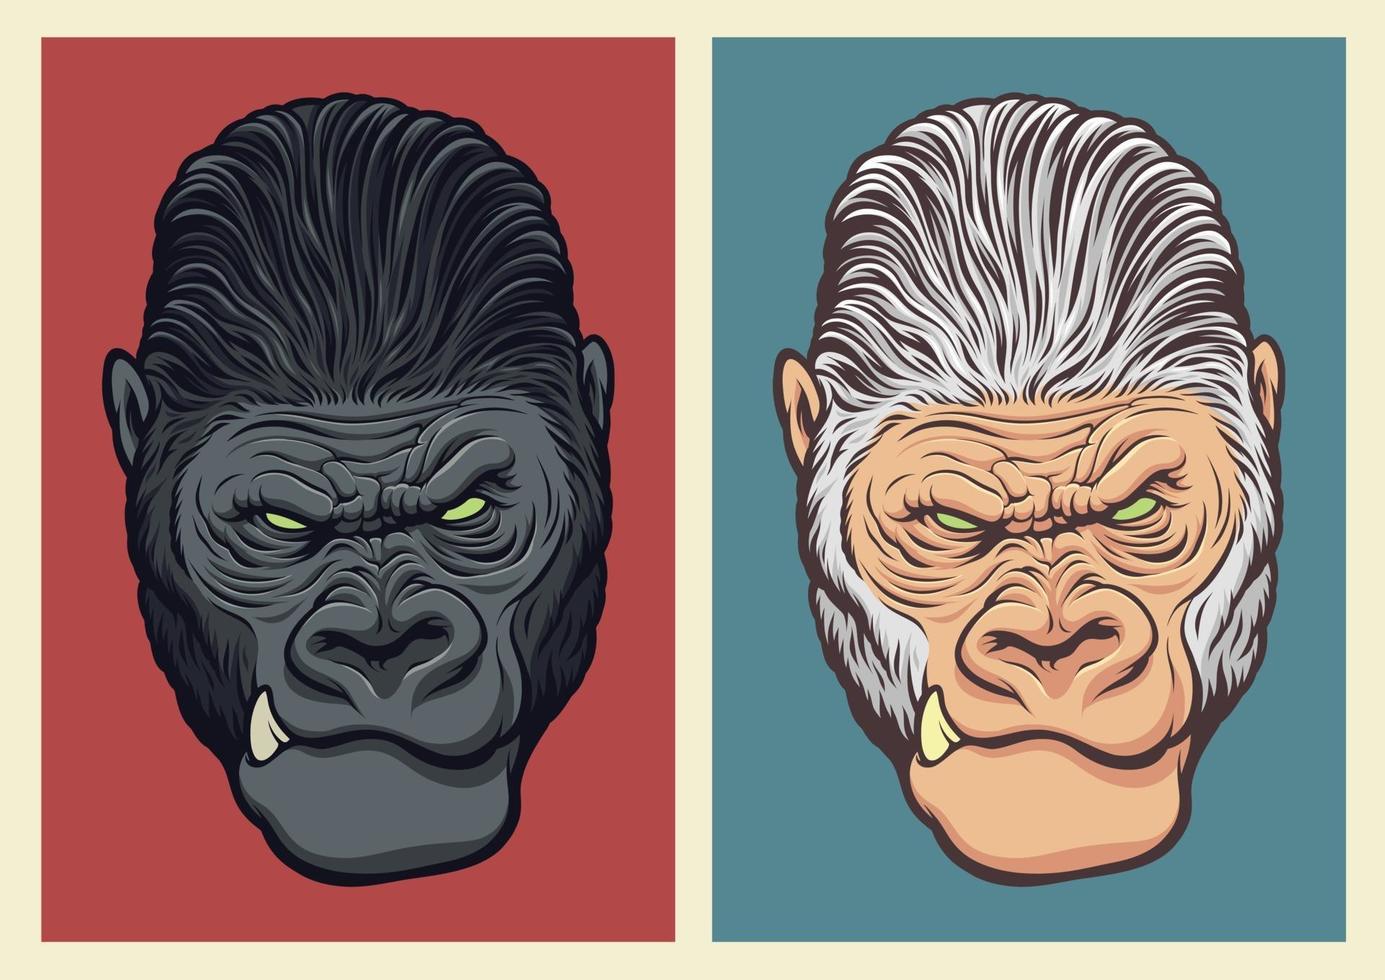 Albino gorilla illustration for design elements vector